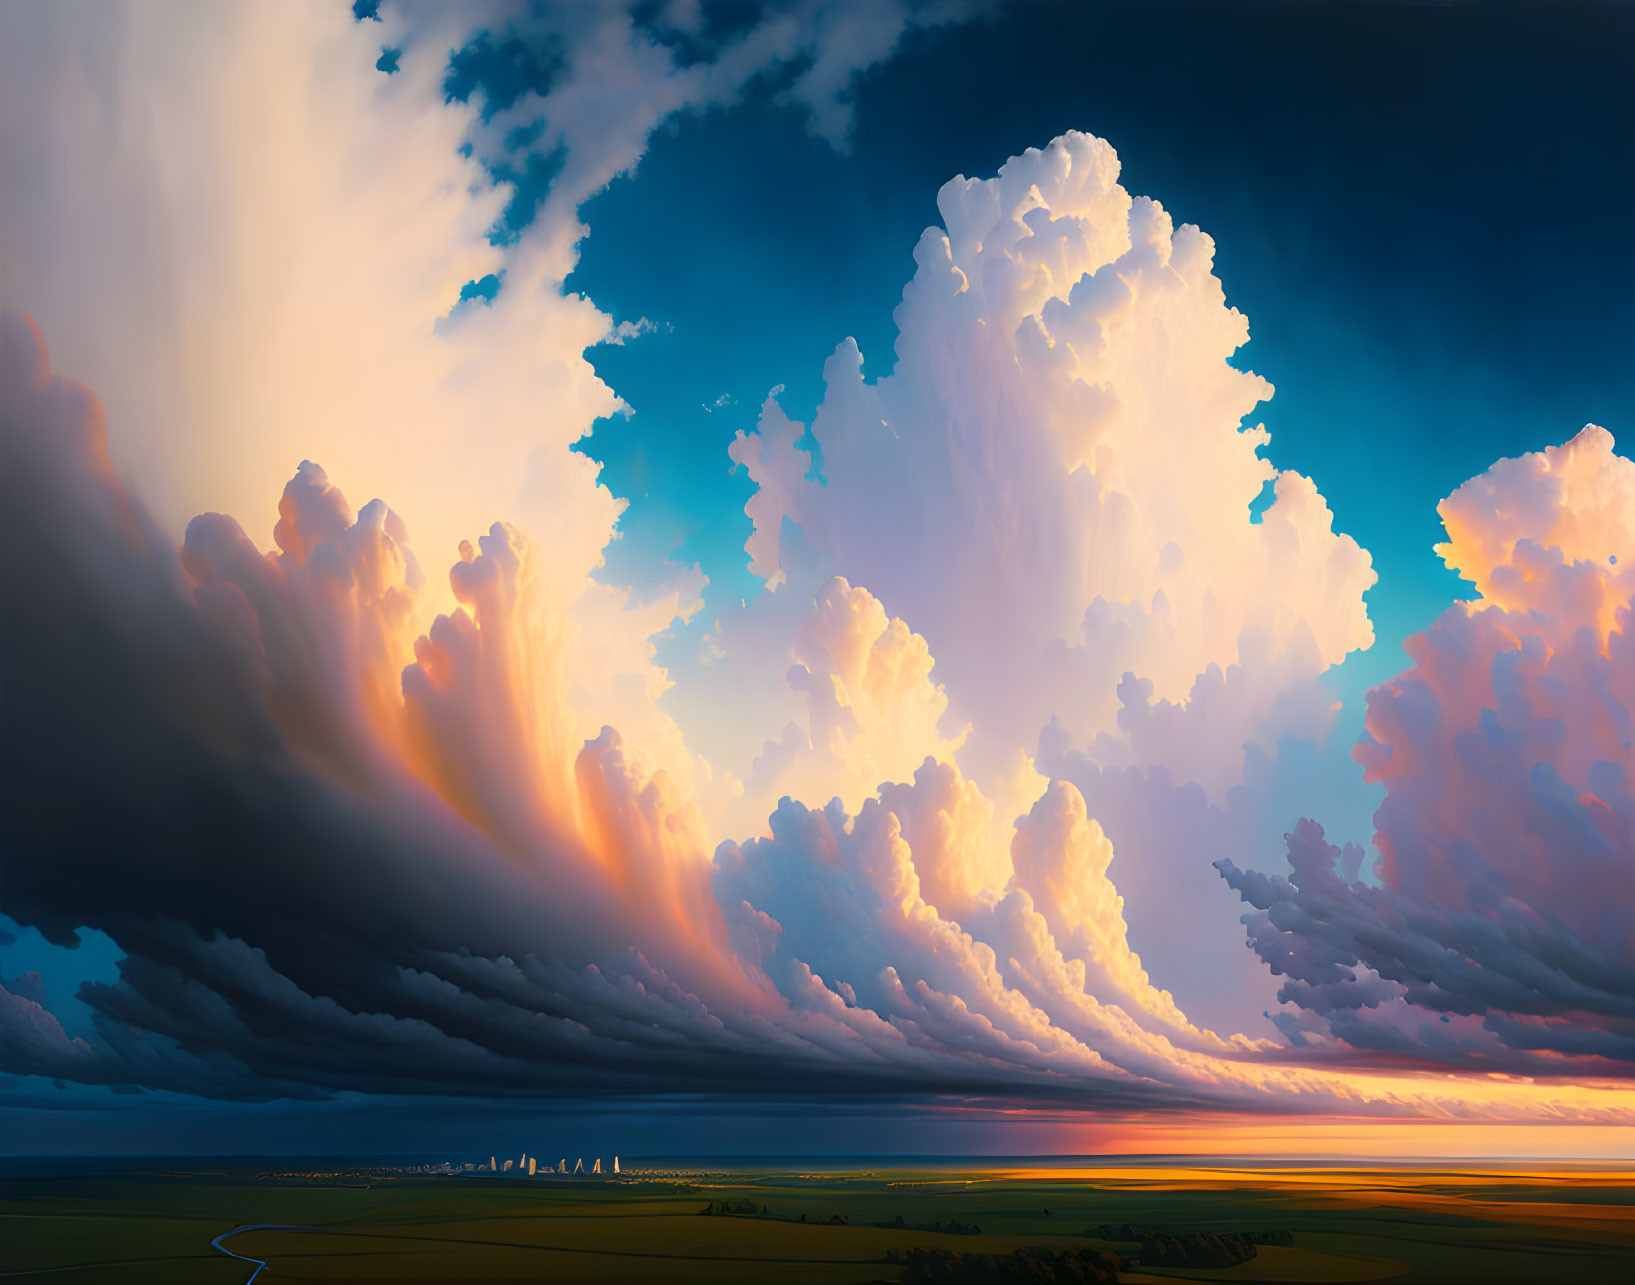 Majestic cumulus clouds illuminated by warm sunlight over serene landscape